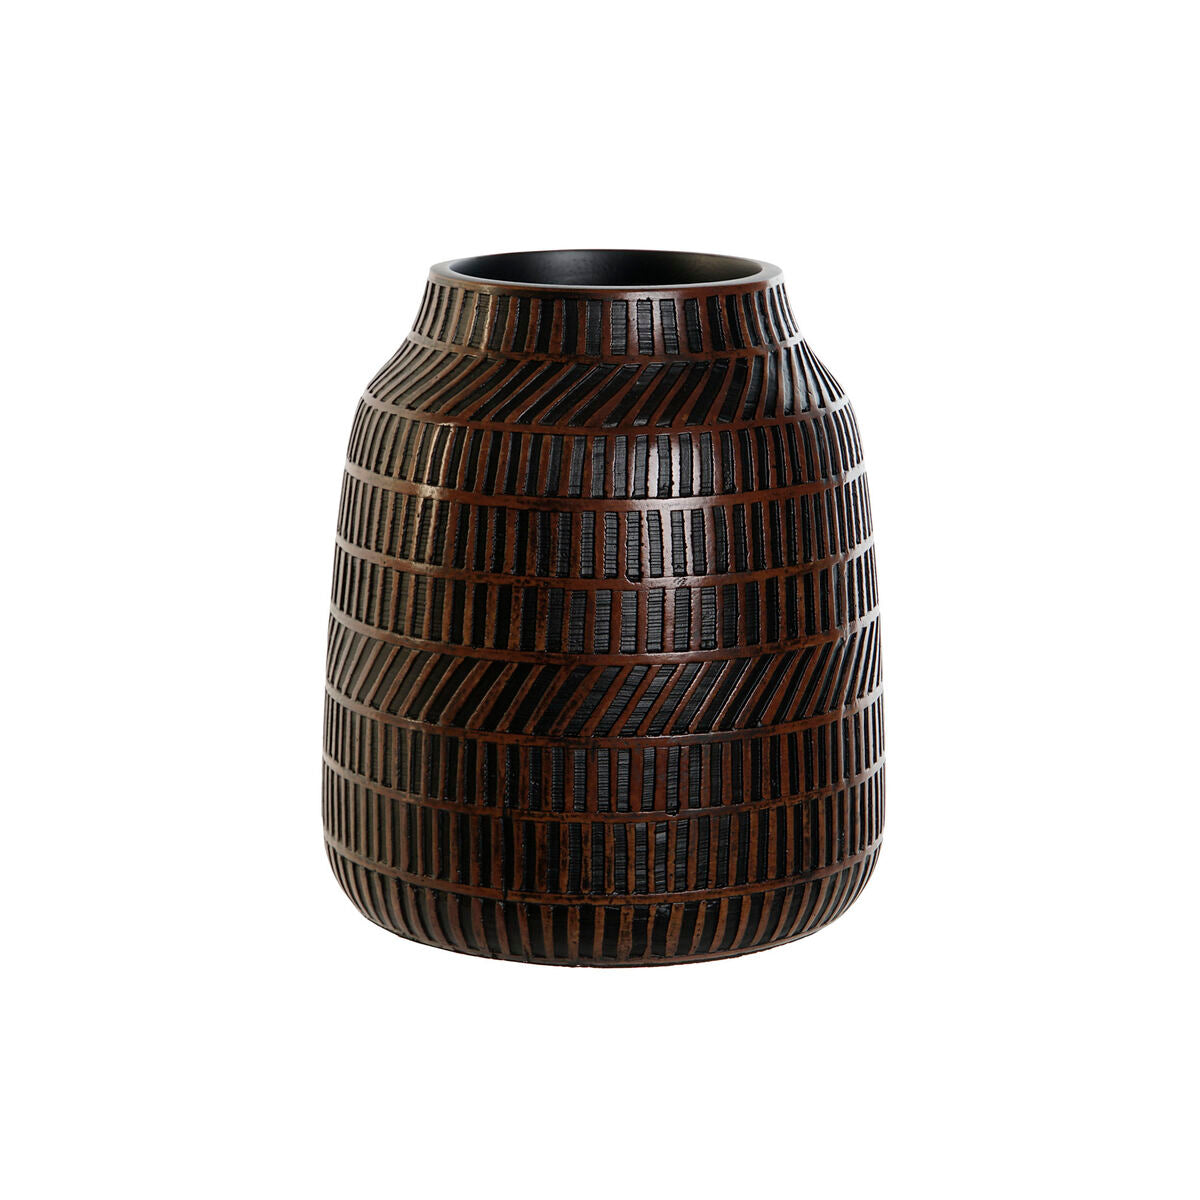 Vase Home ESPRIT Brown Black Resin Colonial 19 x 19 x 21 cm